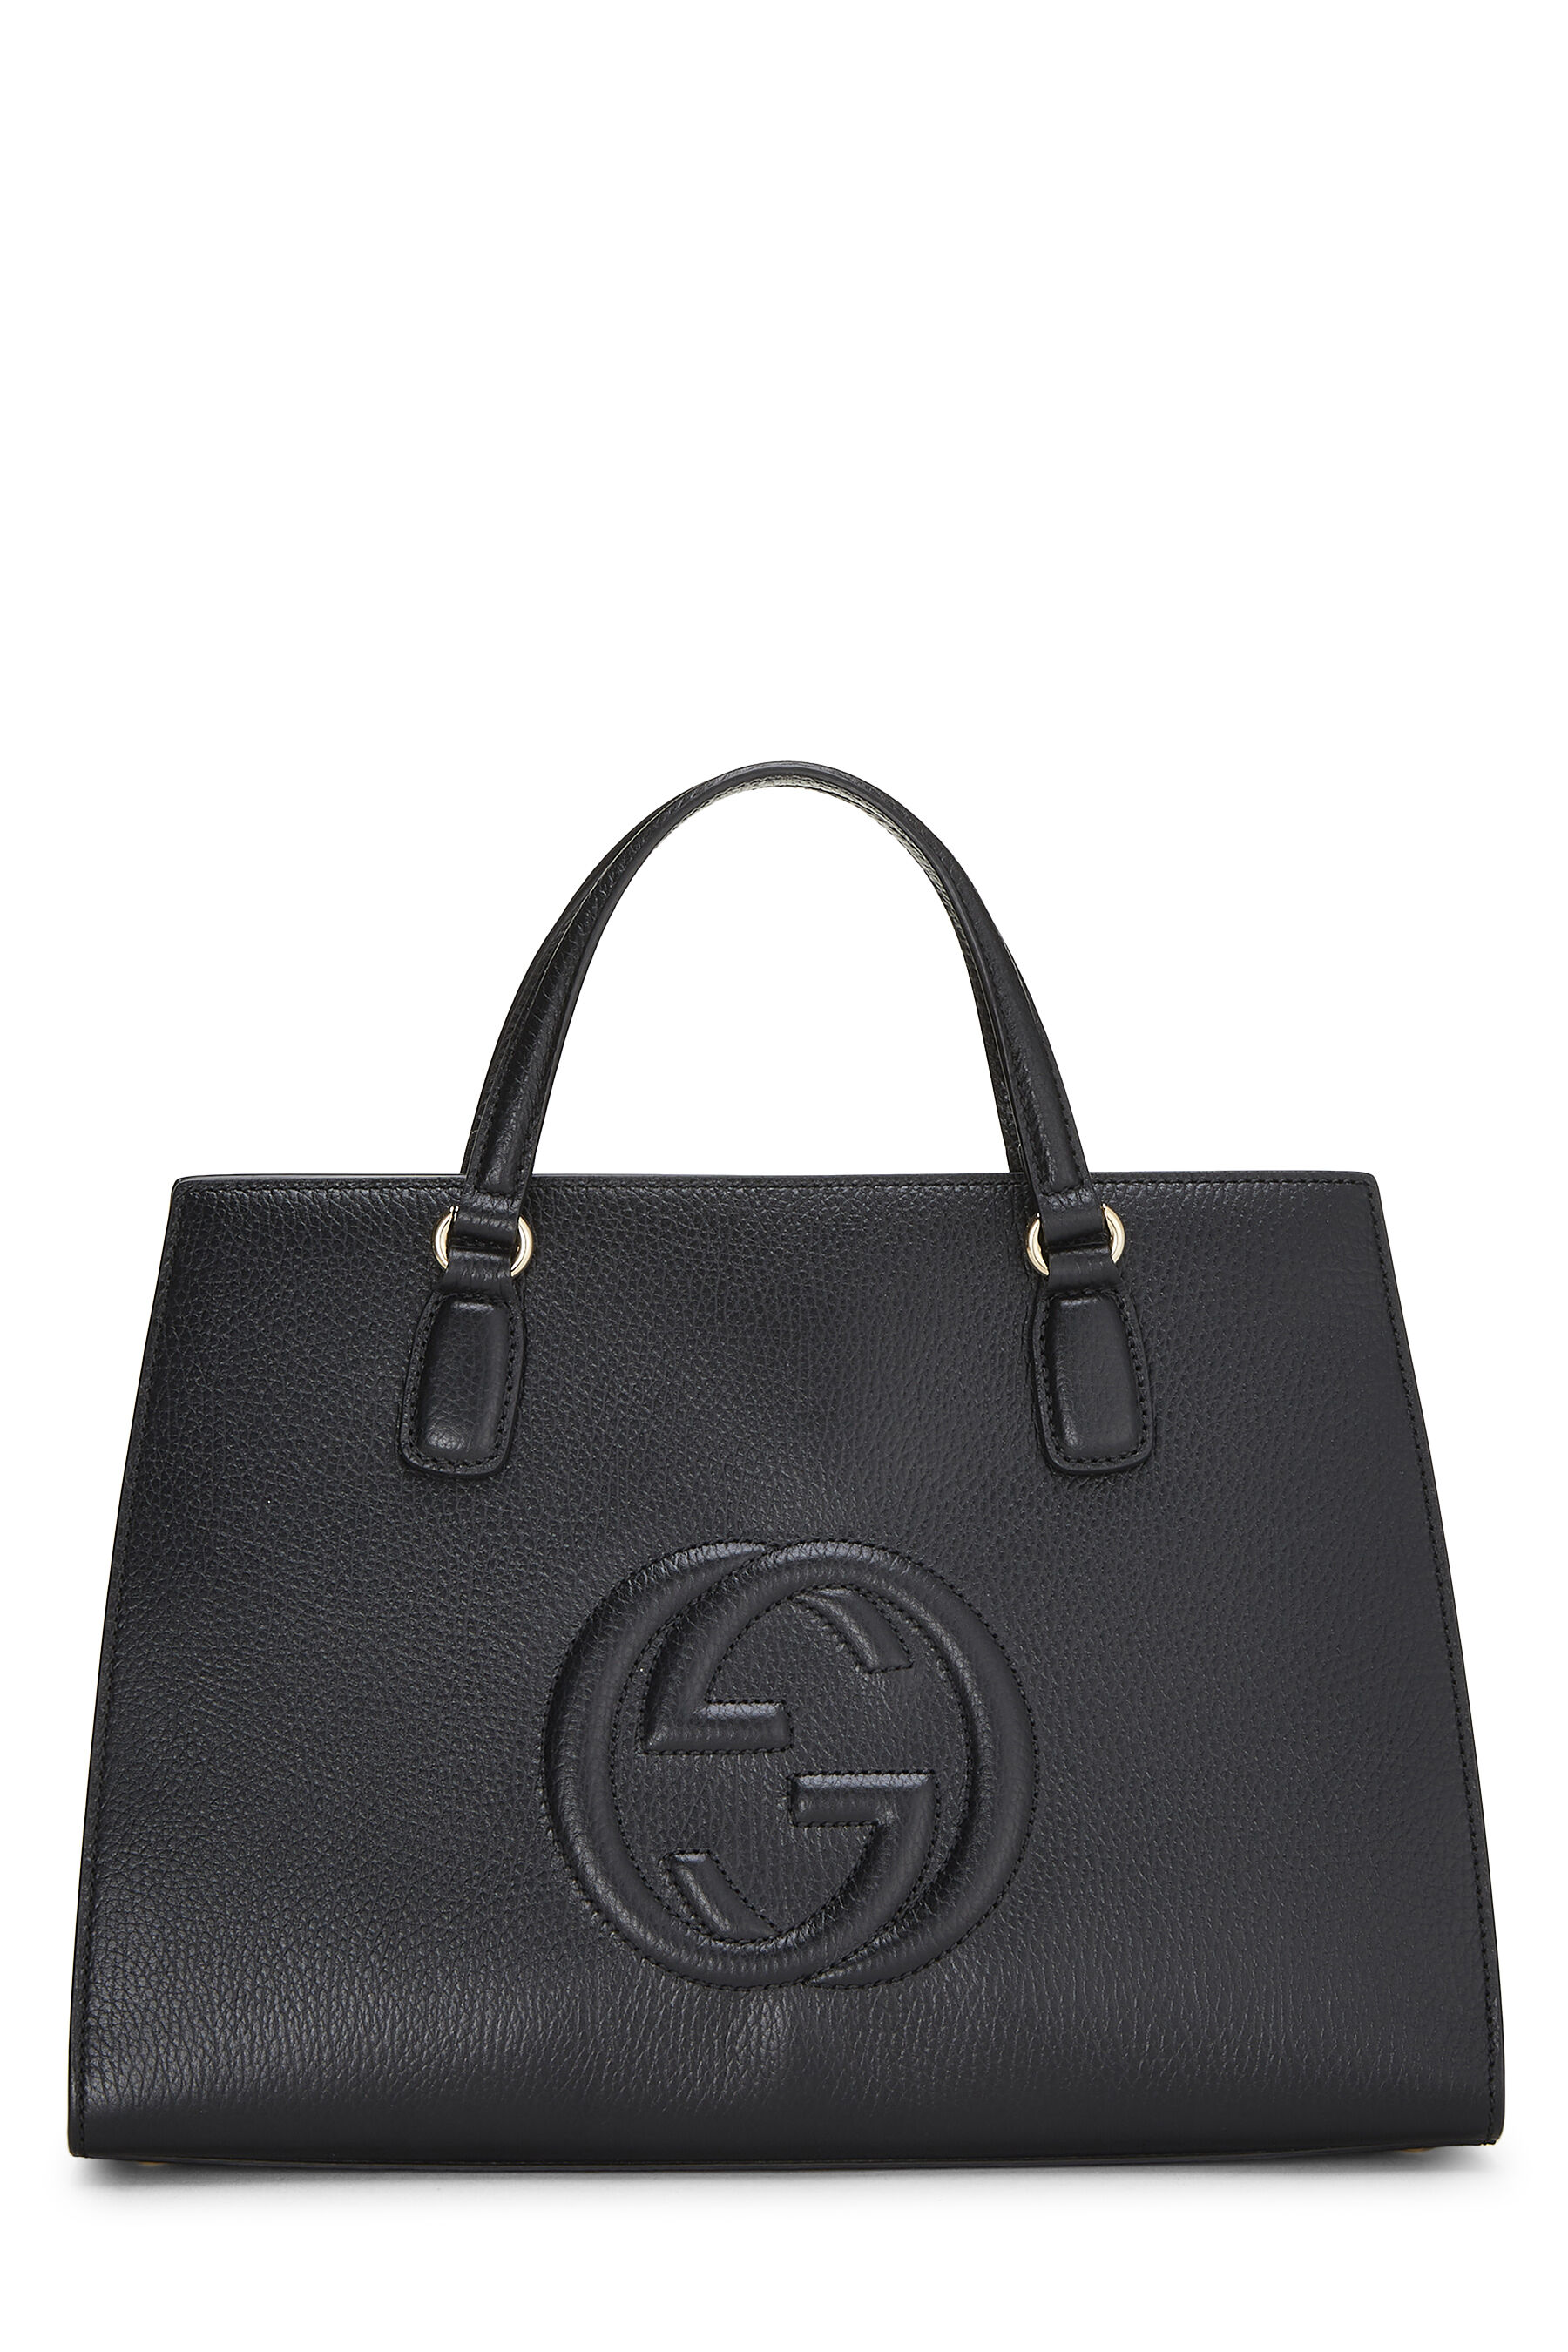 Black Grained Leather Soho Handbag